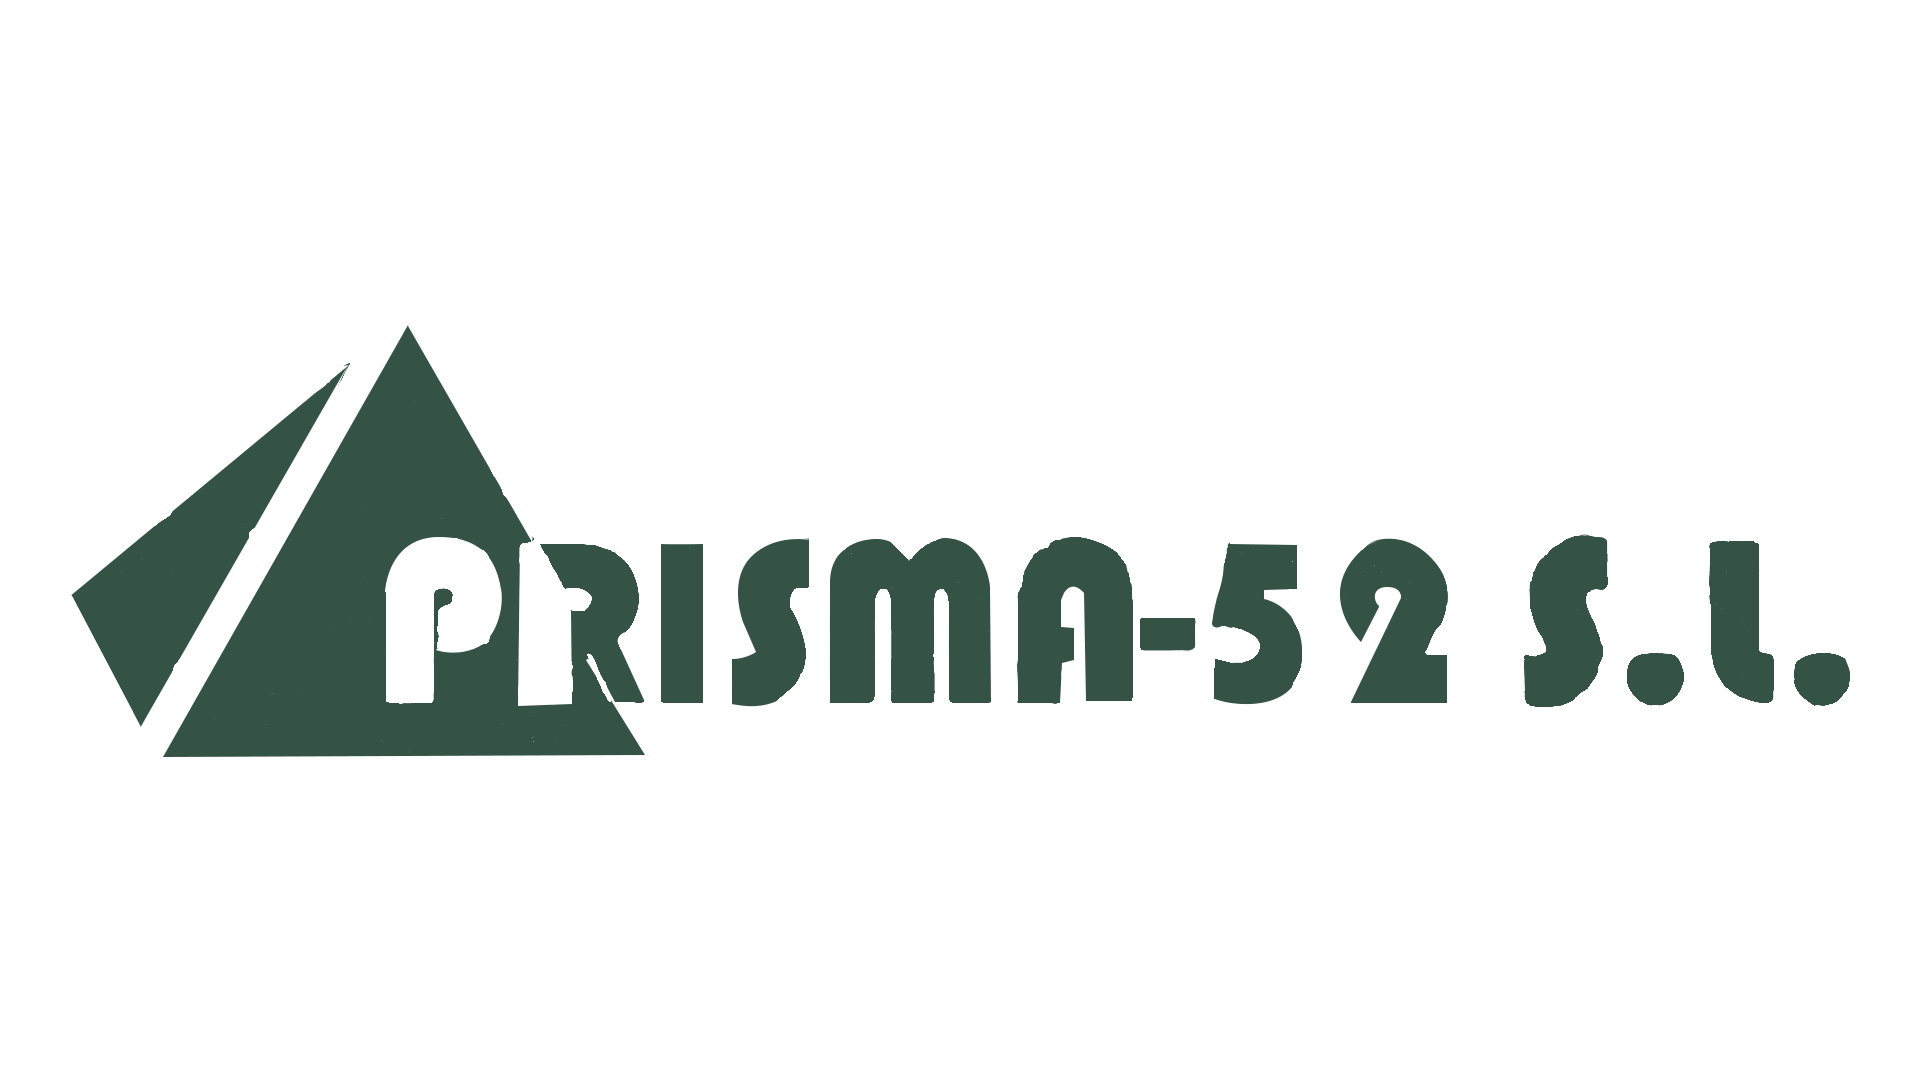 Prisma52